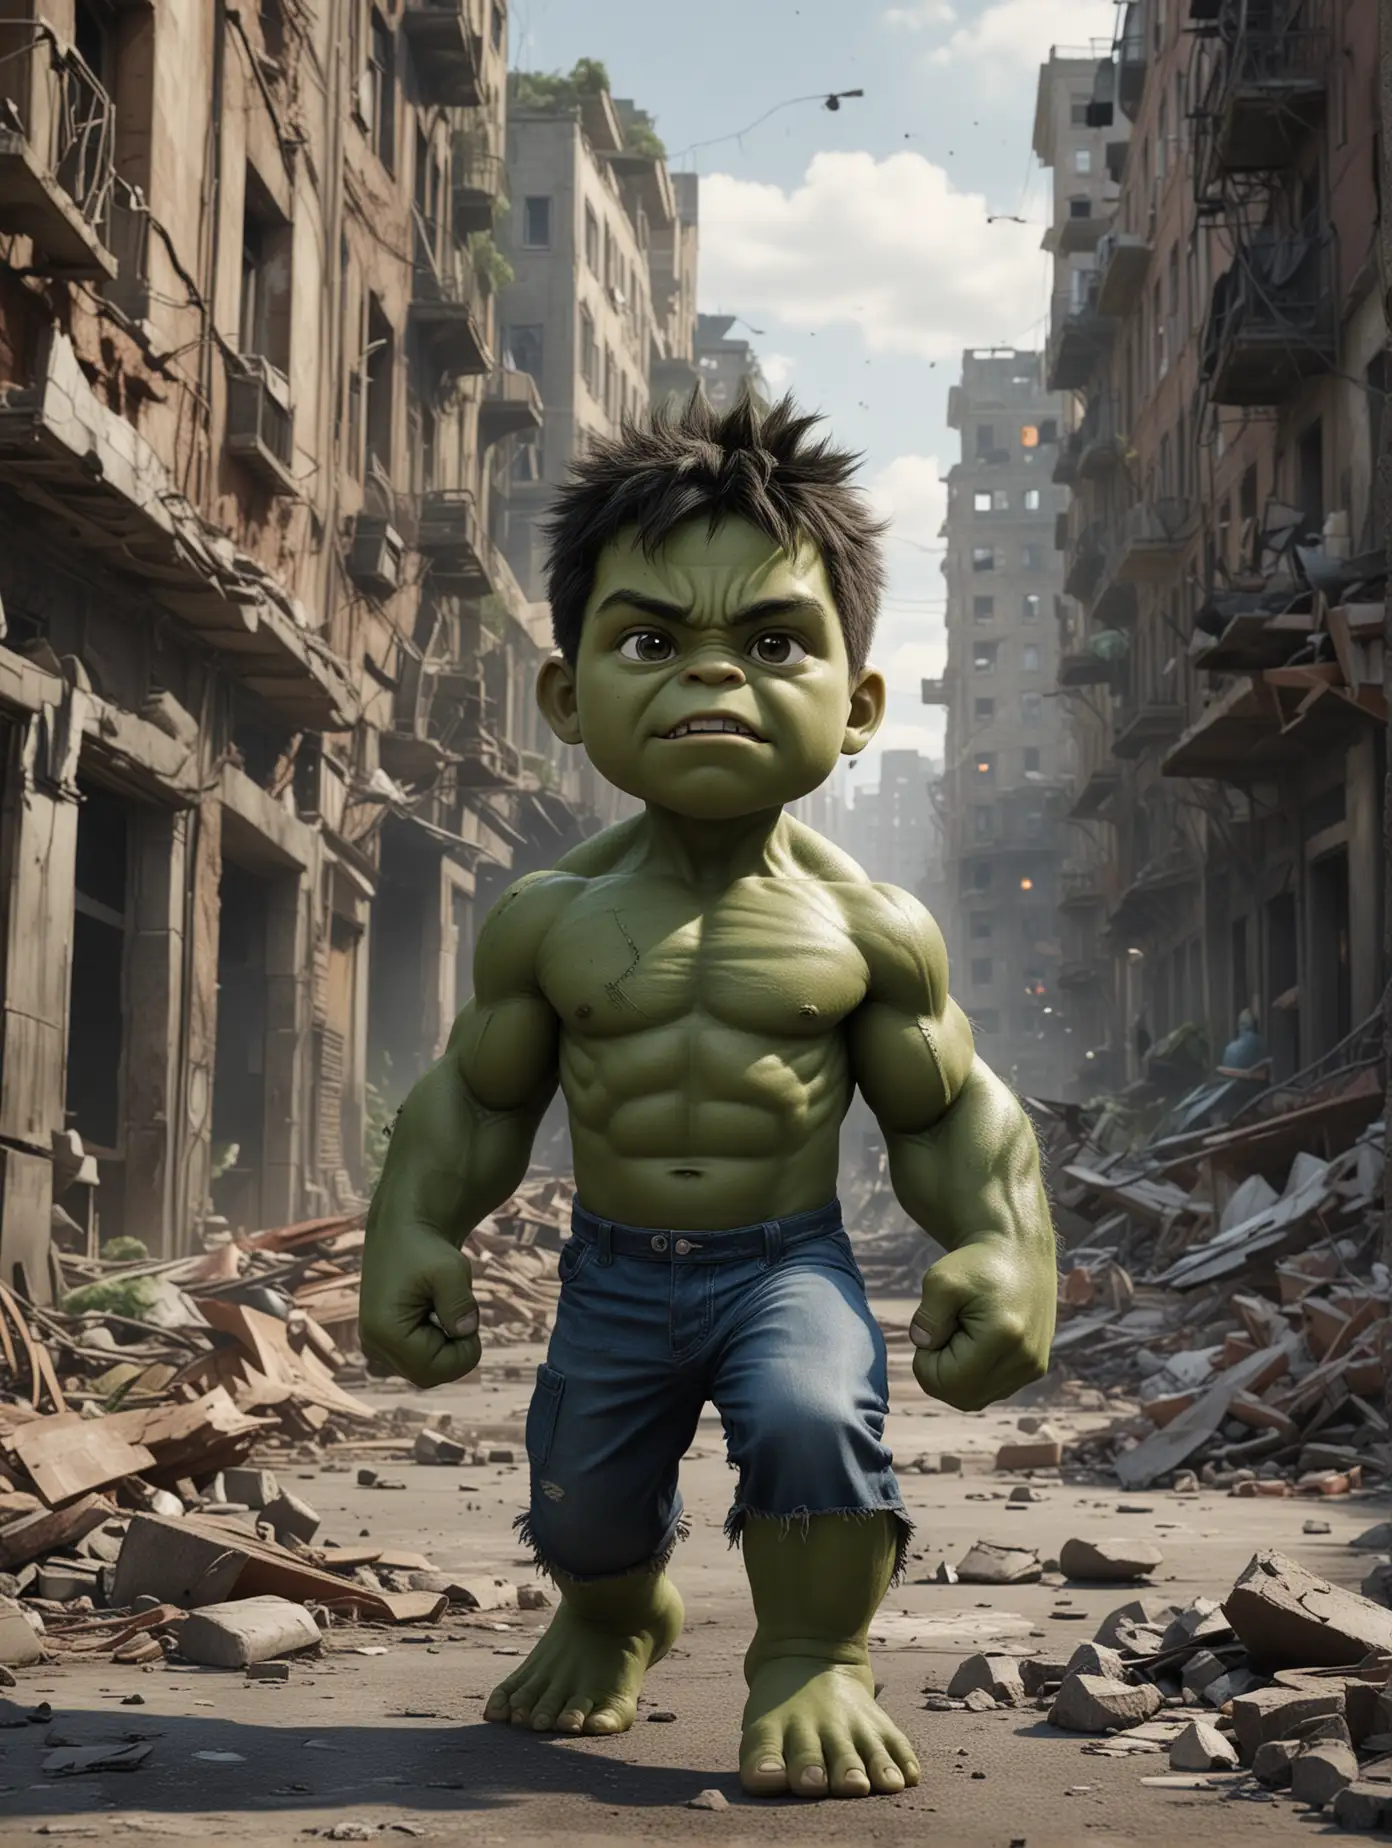 Hulk Transformation Epic 7YearOld Conquers Devastated City